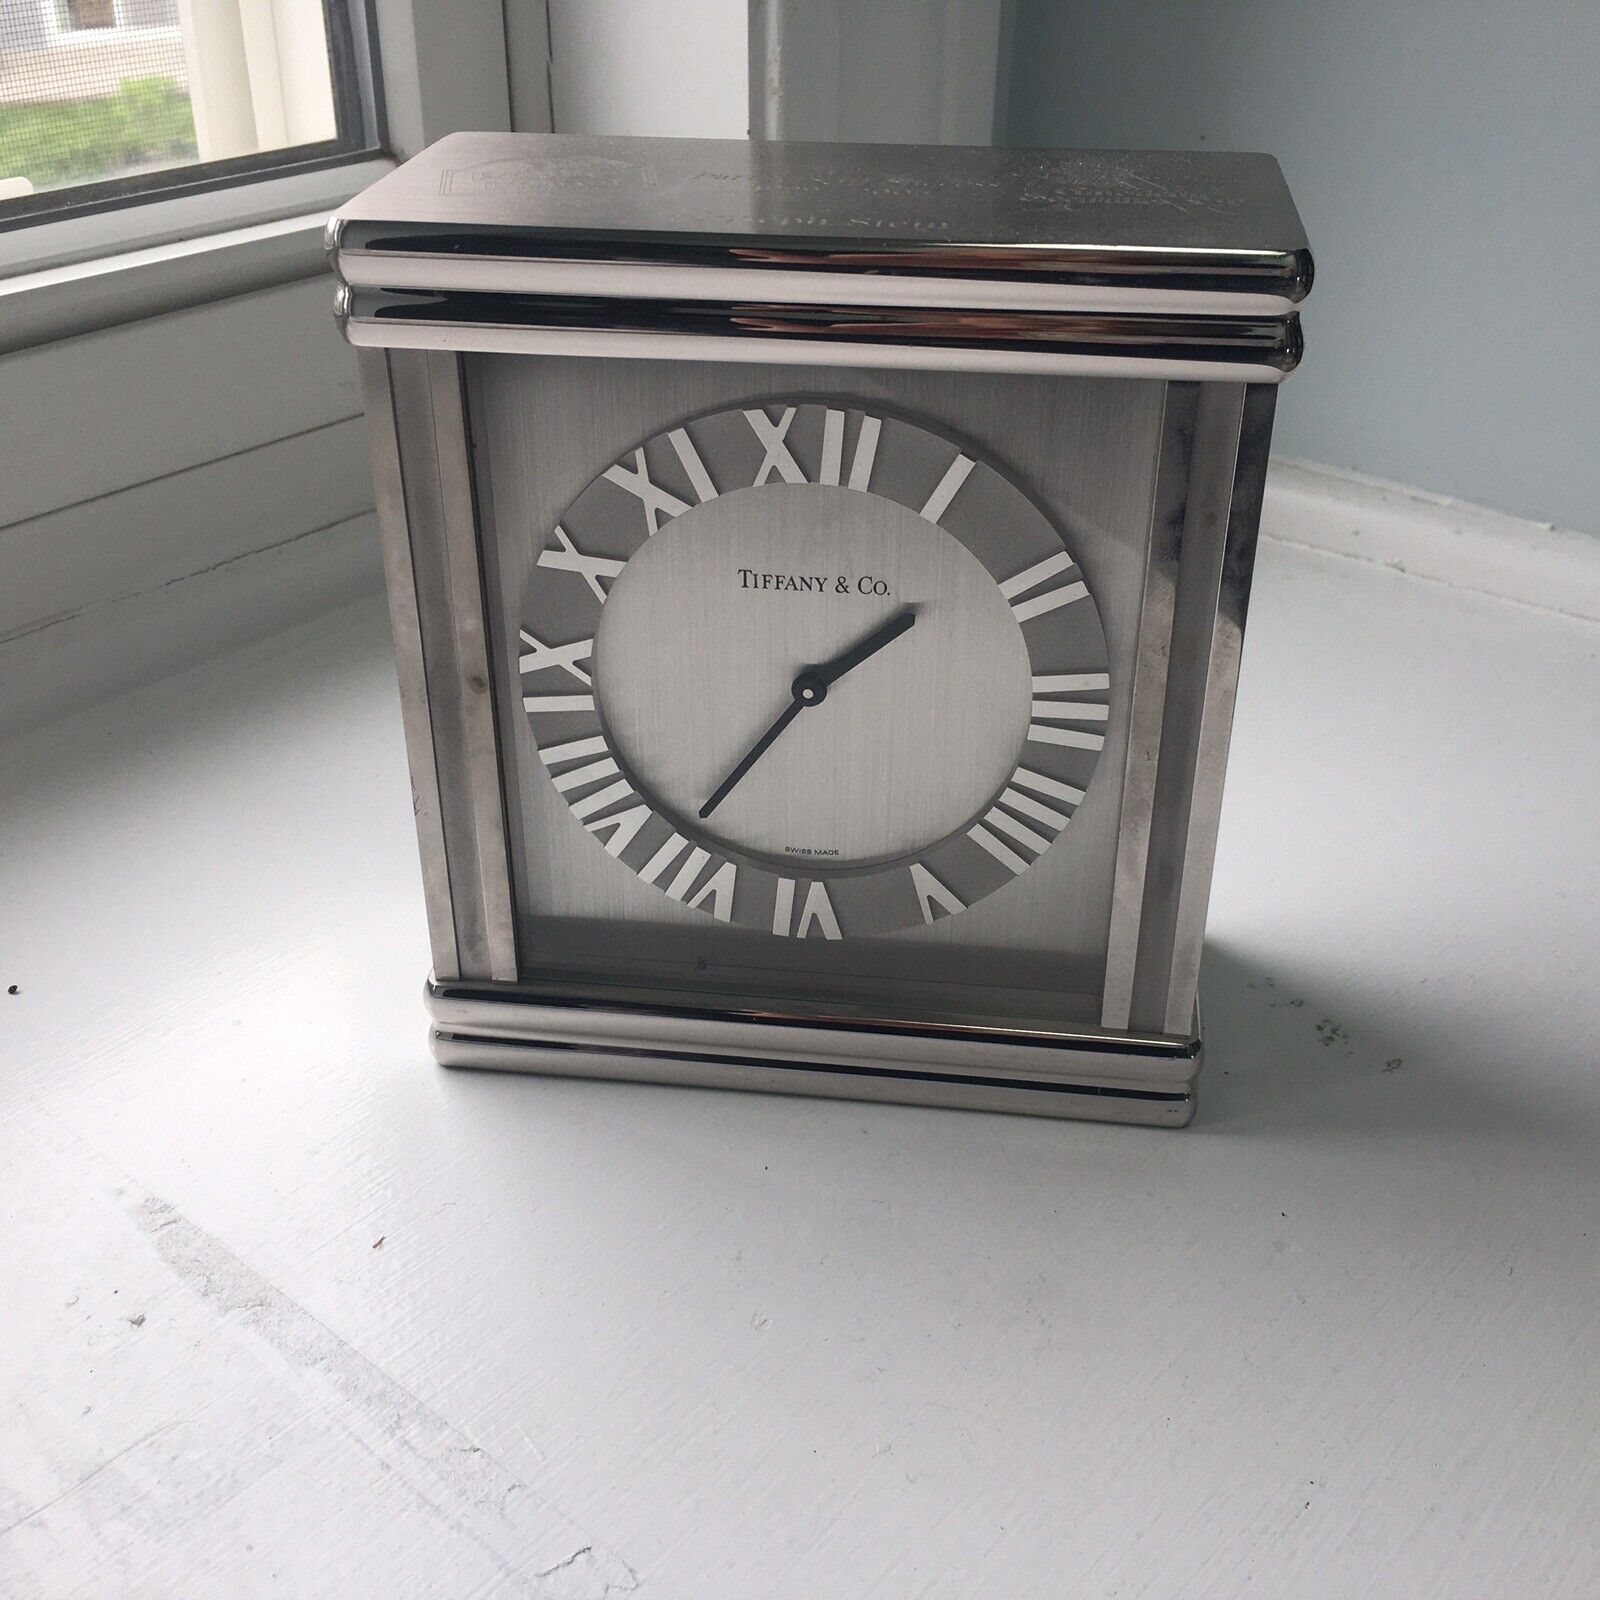 TIFFANY ATLAS RHODIUM Mantel, Shelf, Desk Clock- Beautiful, Quartz / Engraved